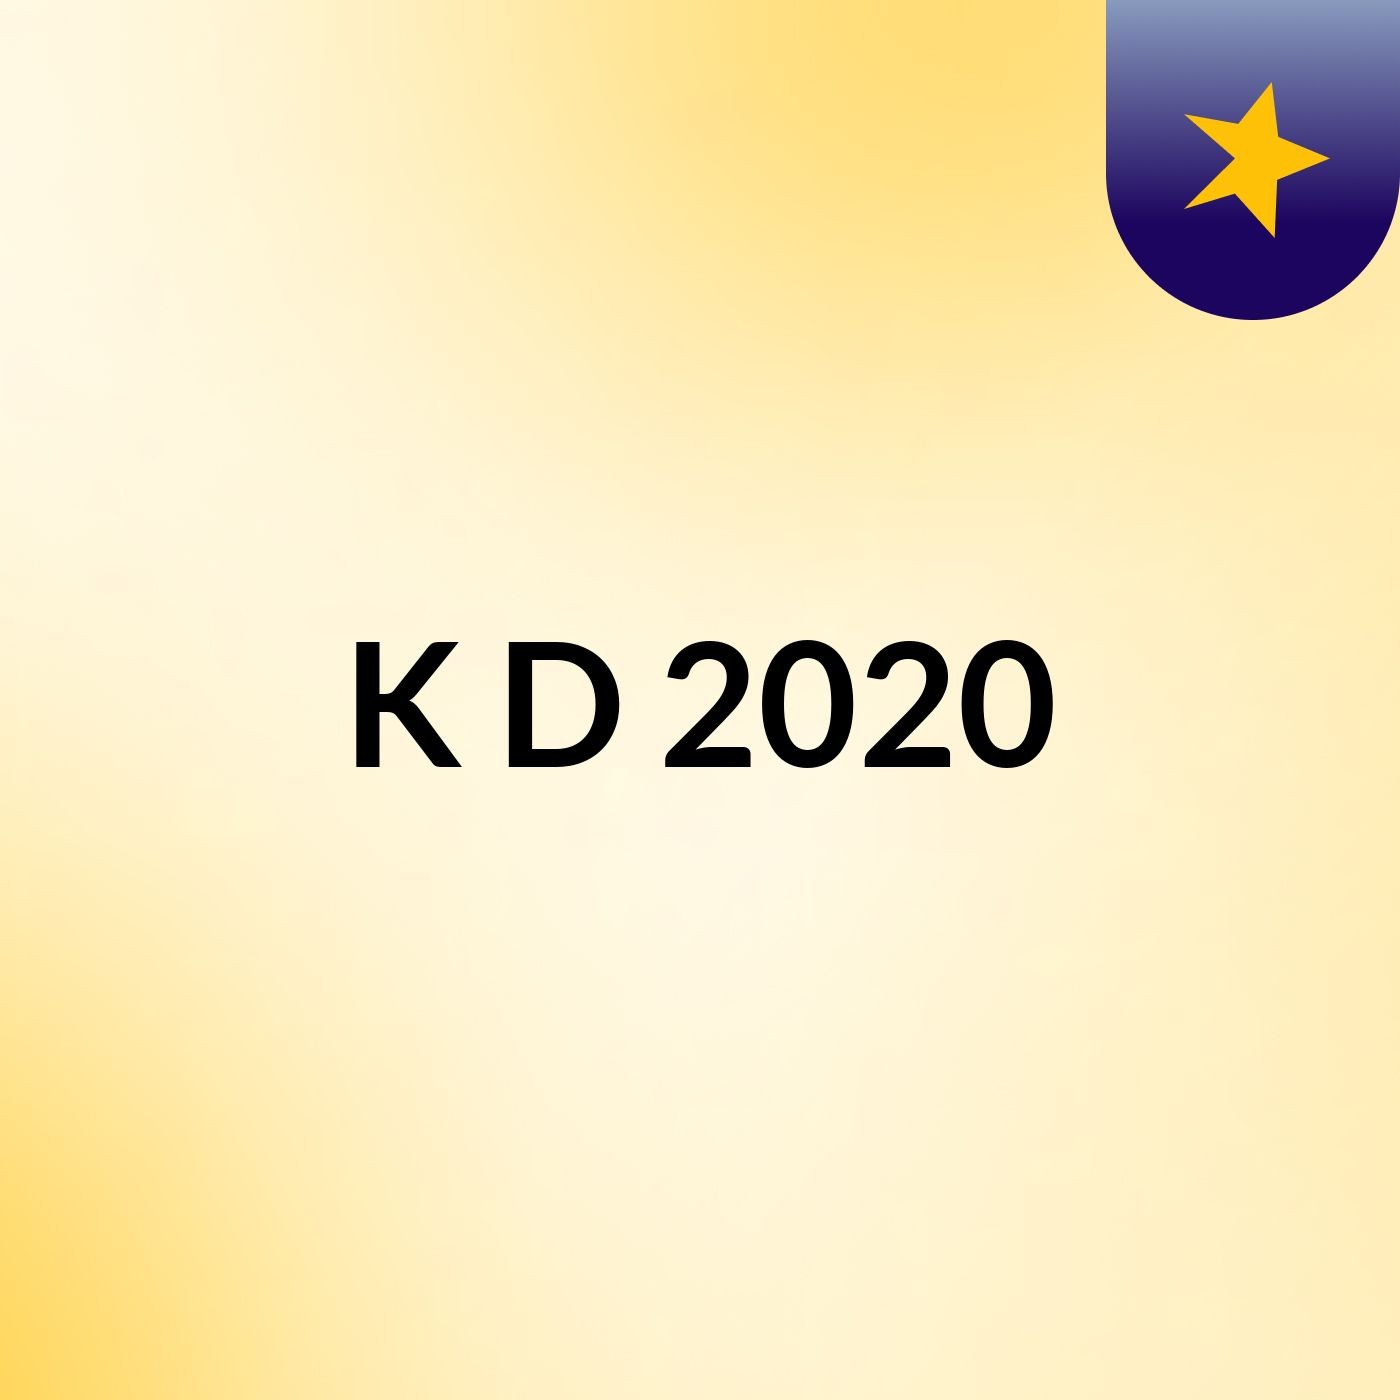 Episode 2 - K&D 2020